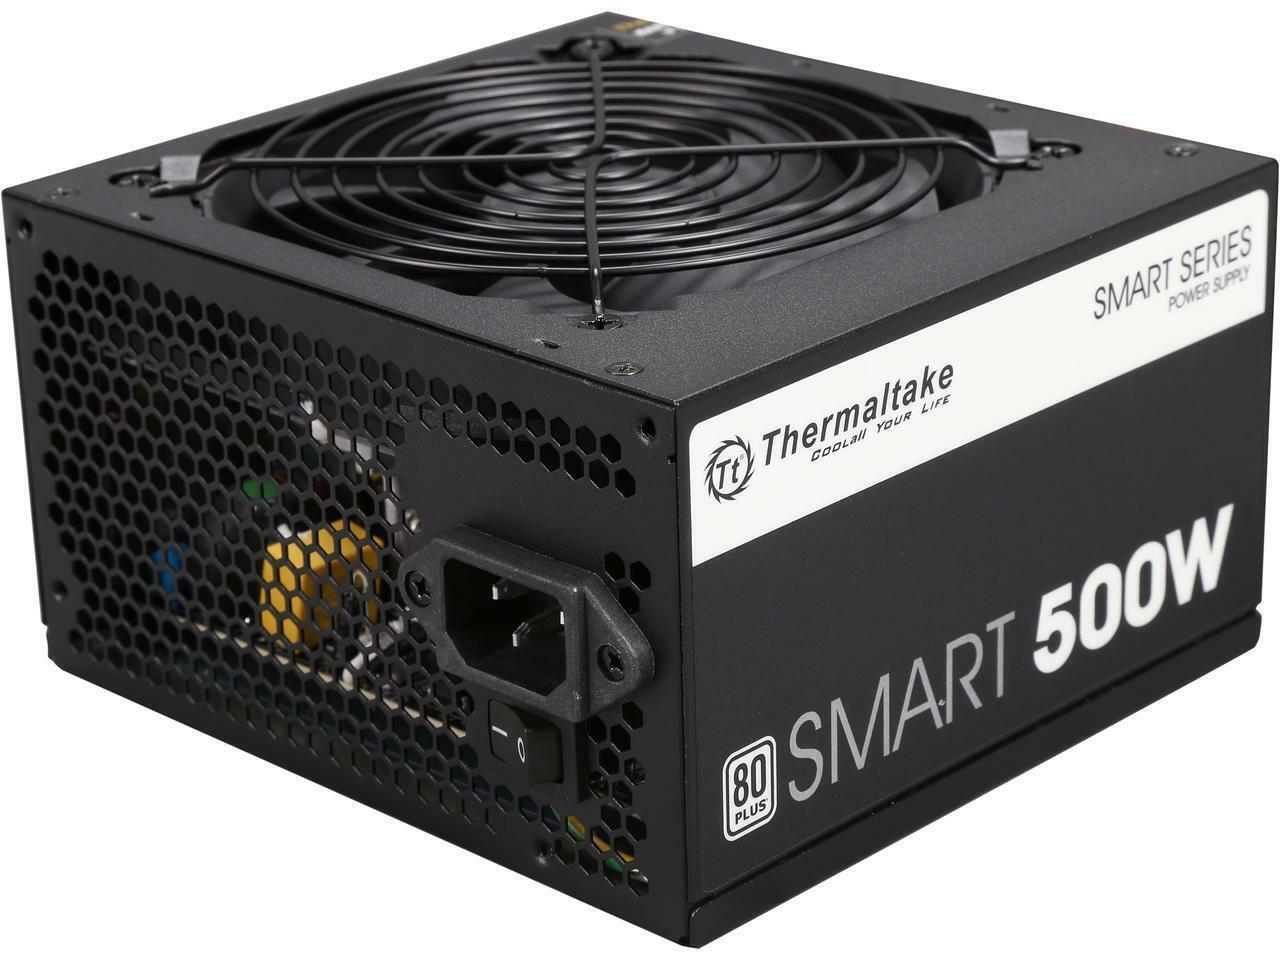 Thermaltake Smart Series 500W SLI/CrossFire Ready Continuous Power ATX 12V V2.3